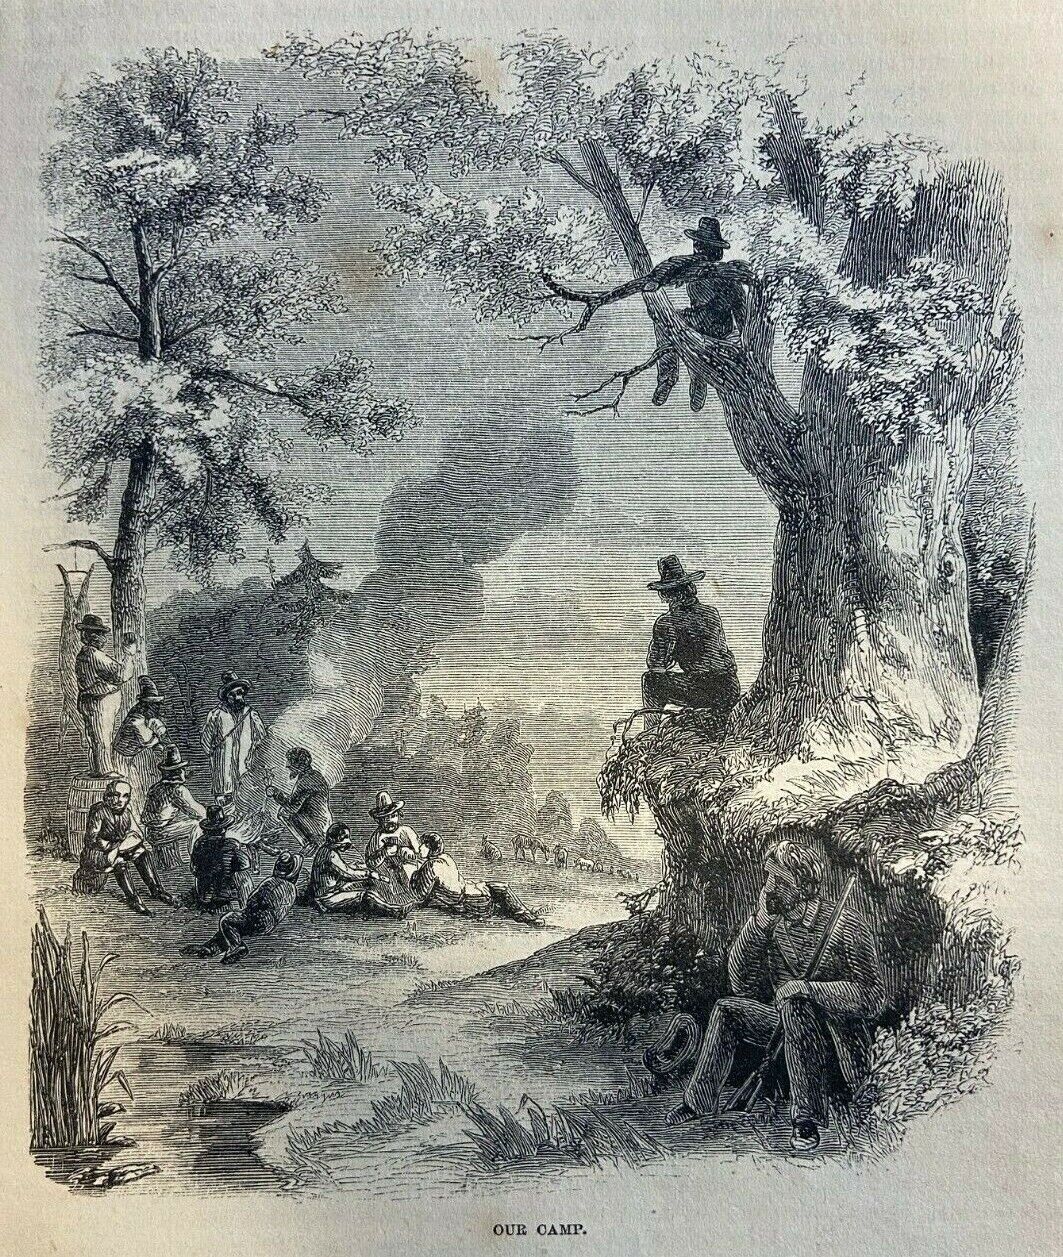 1861 Hunting Adventures of California Coast Rangers illustrated